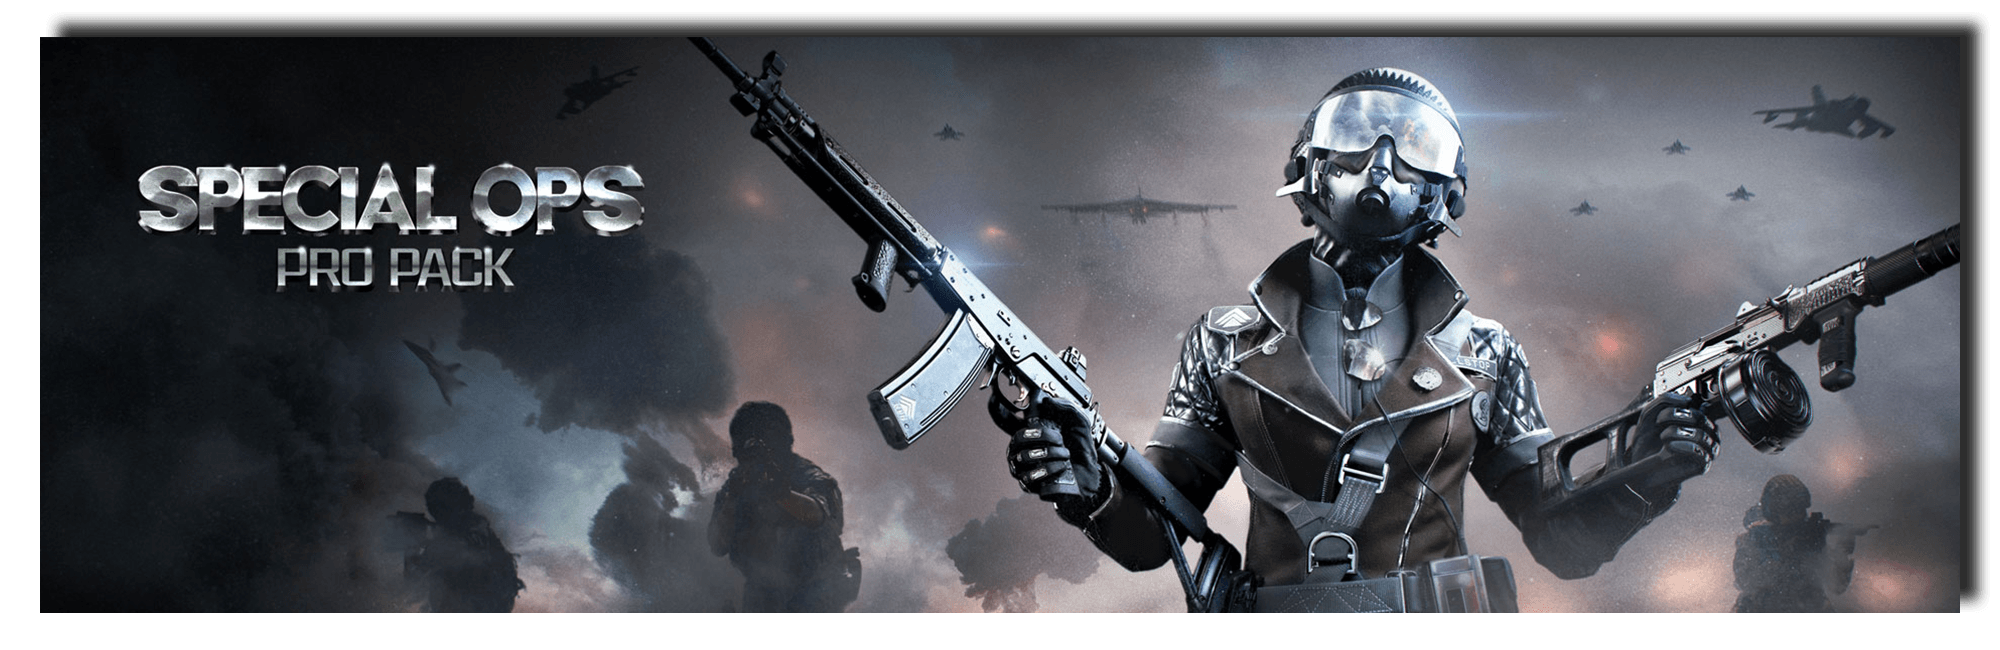 CoD Warzone: atualização nerfa C58, FARA 83 e Nail Gun, esports